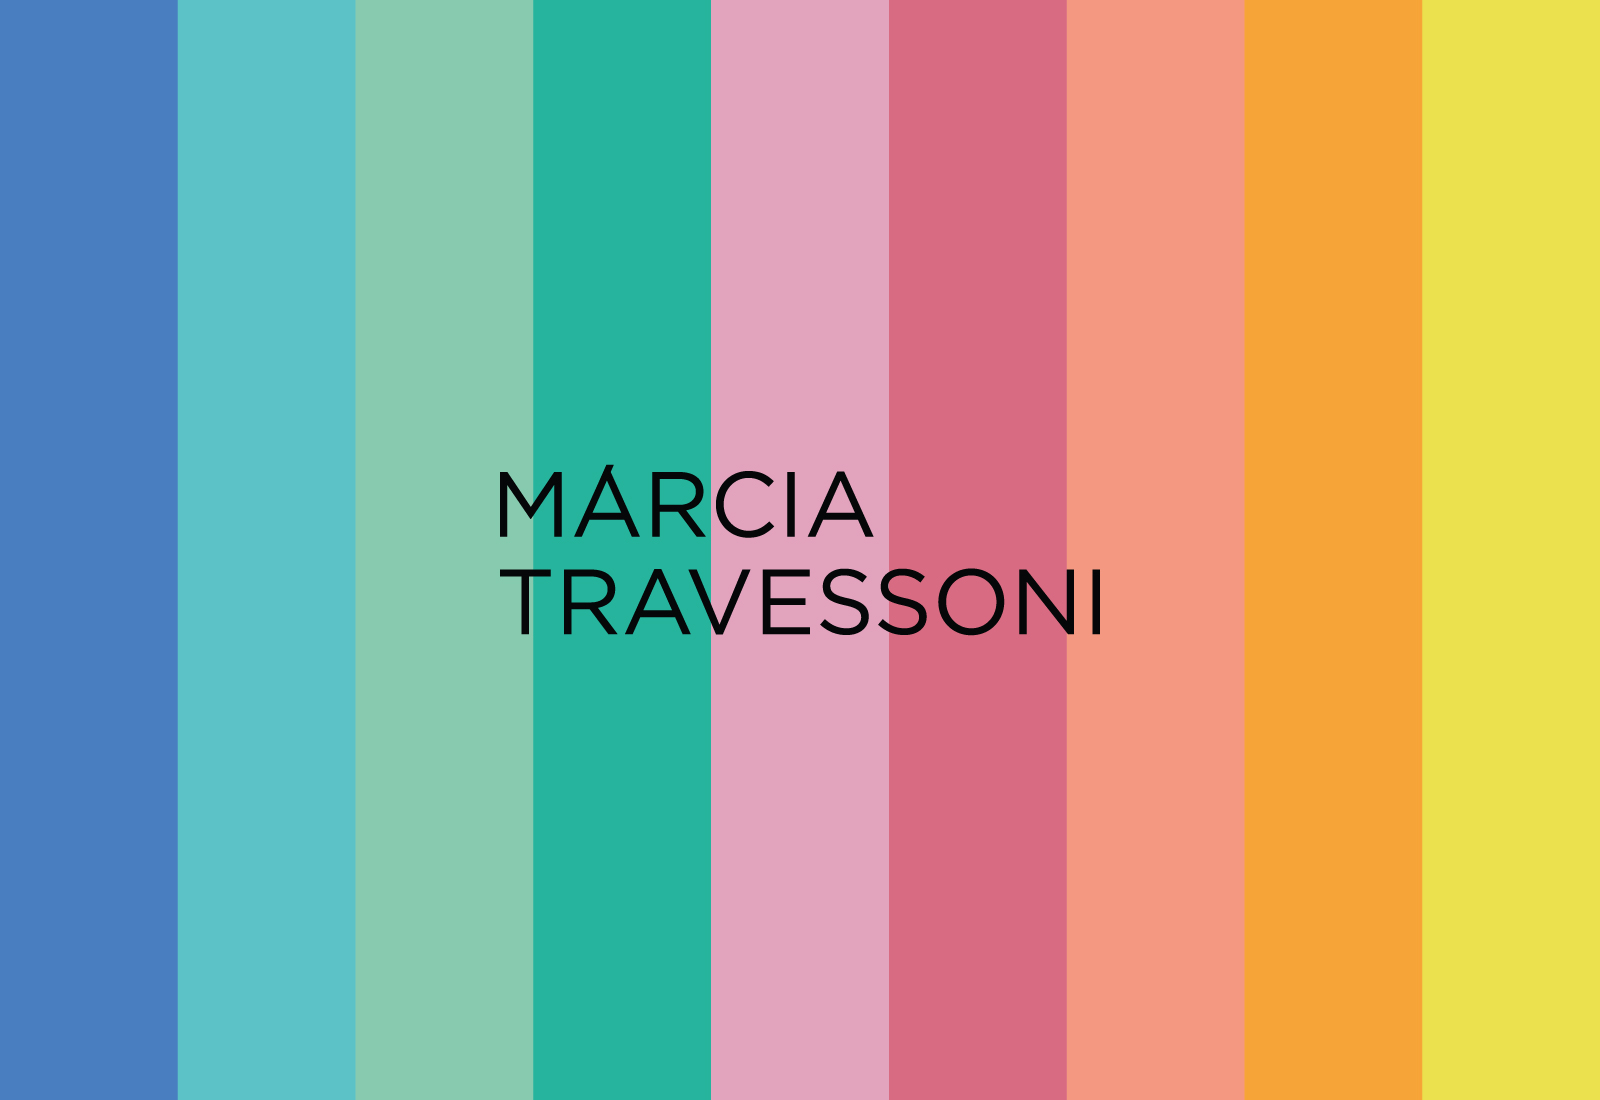 Plataforma Márcia Travessoni apresenta nova identidade visual